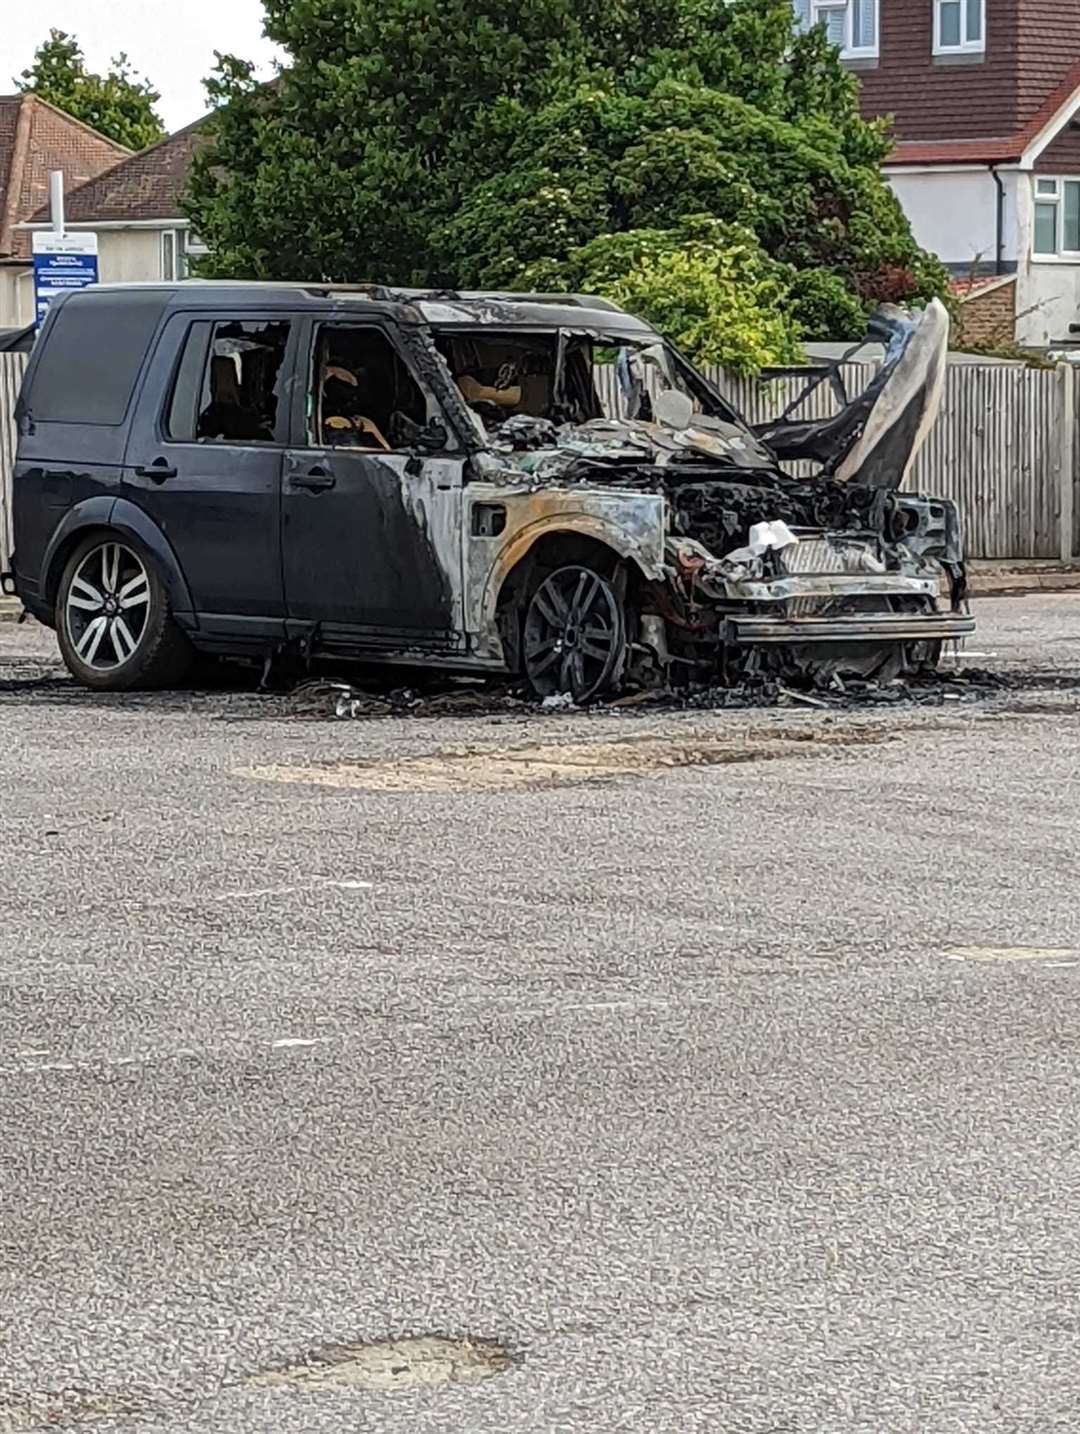 The burnt out car in pub car park